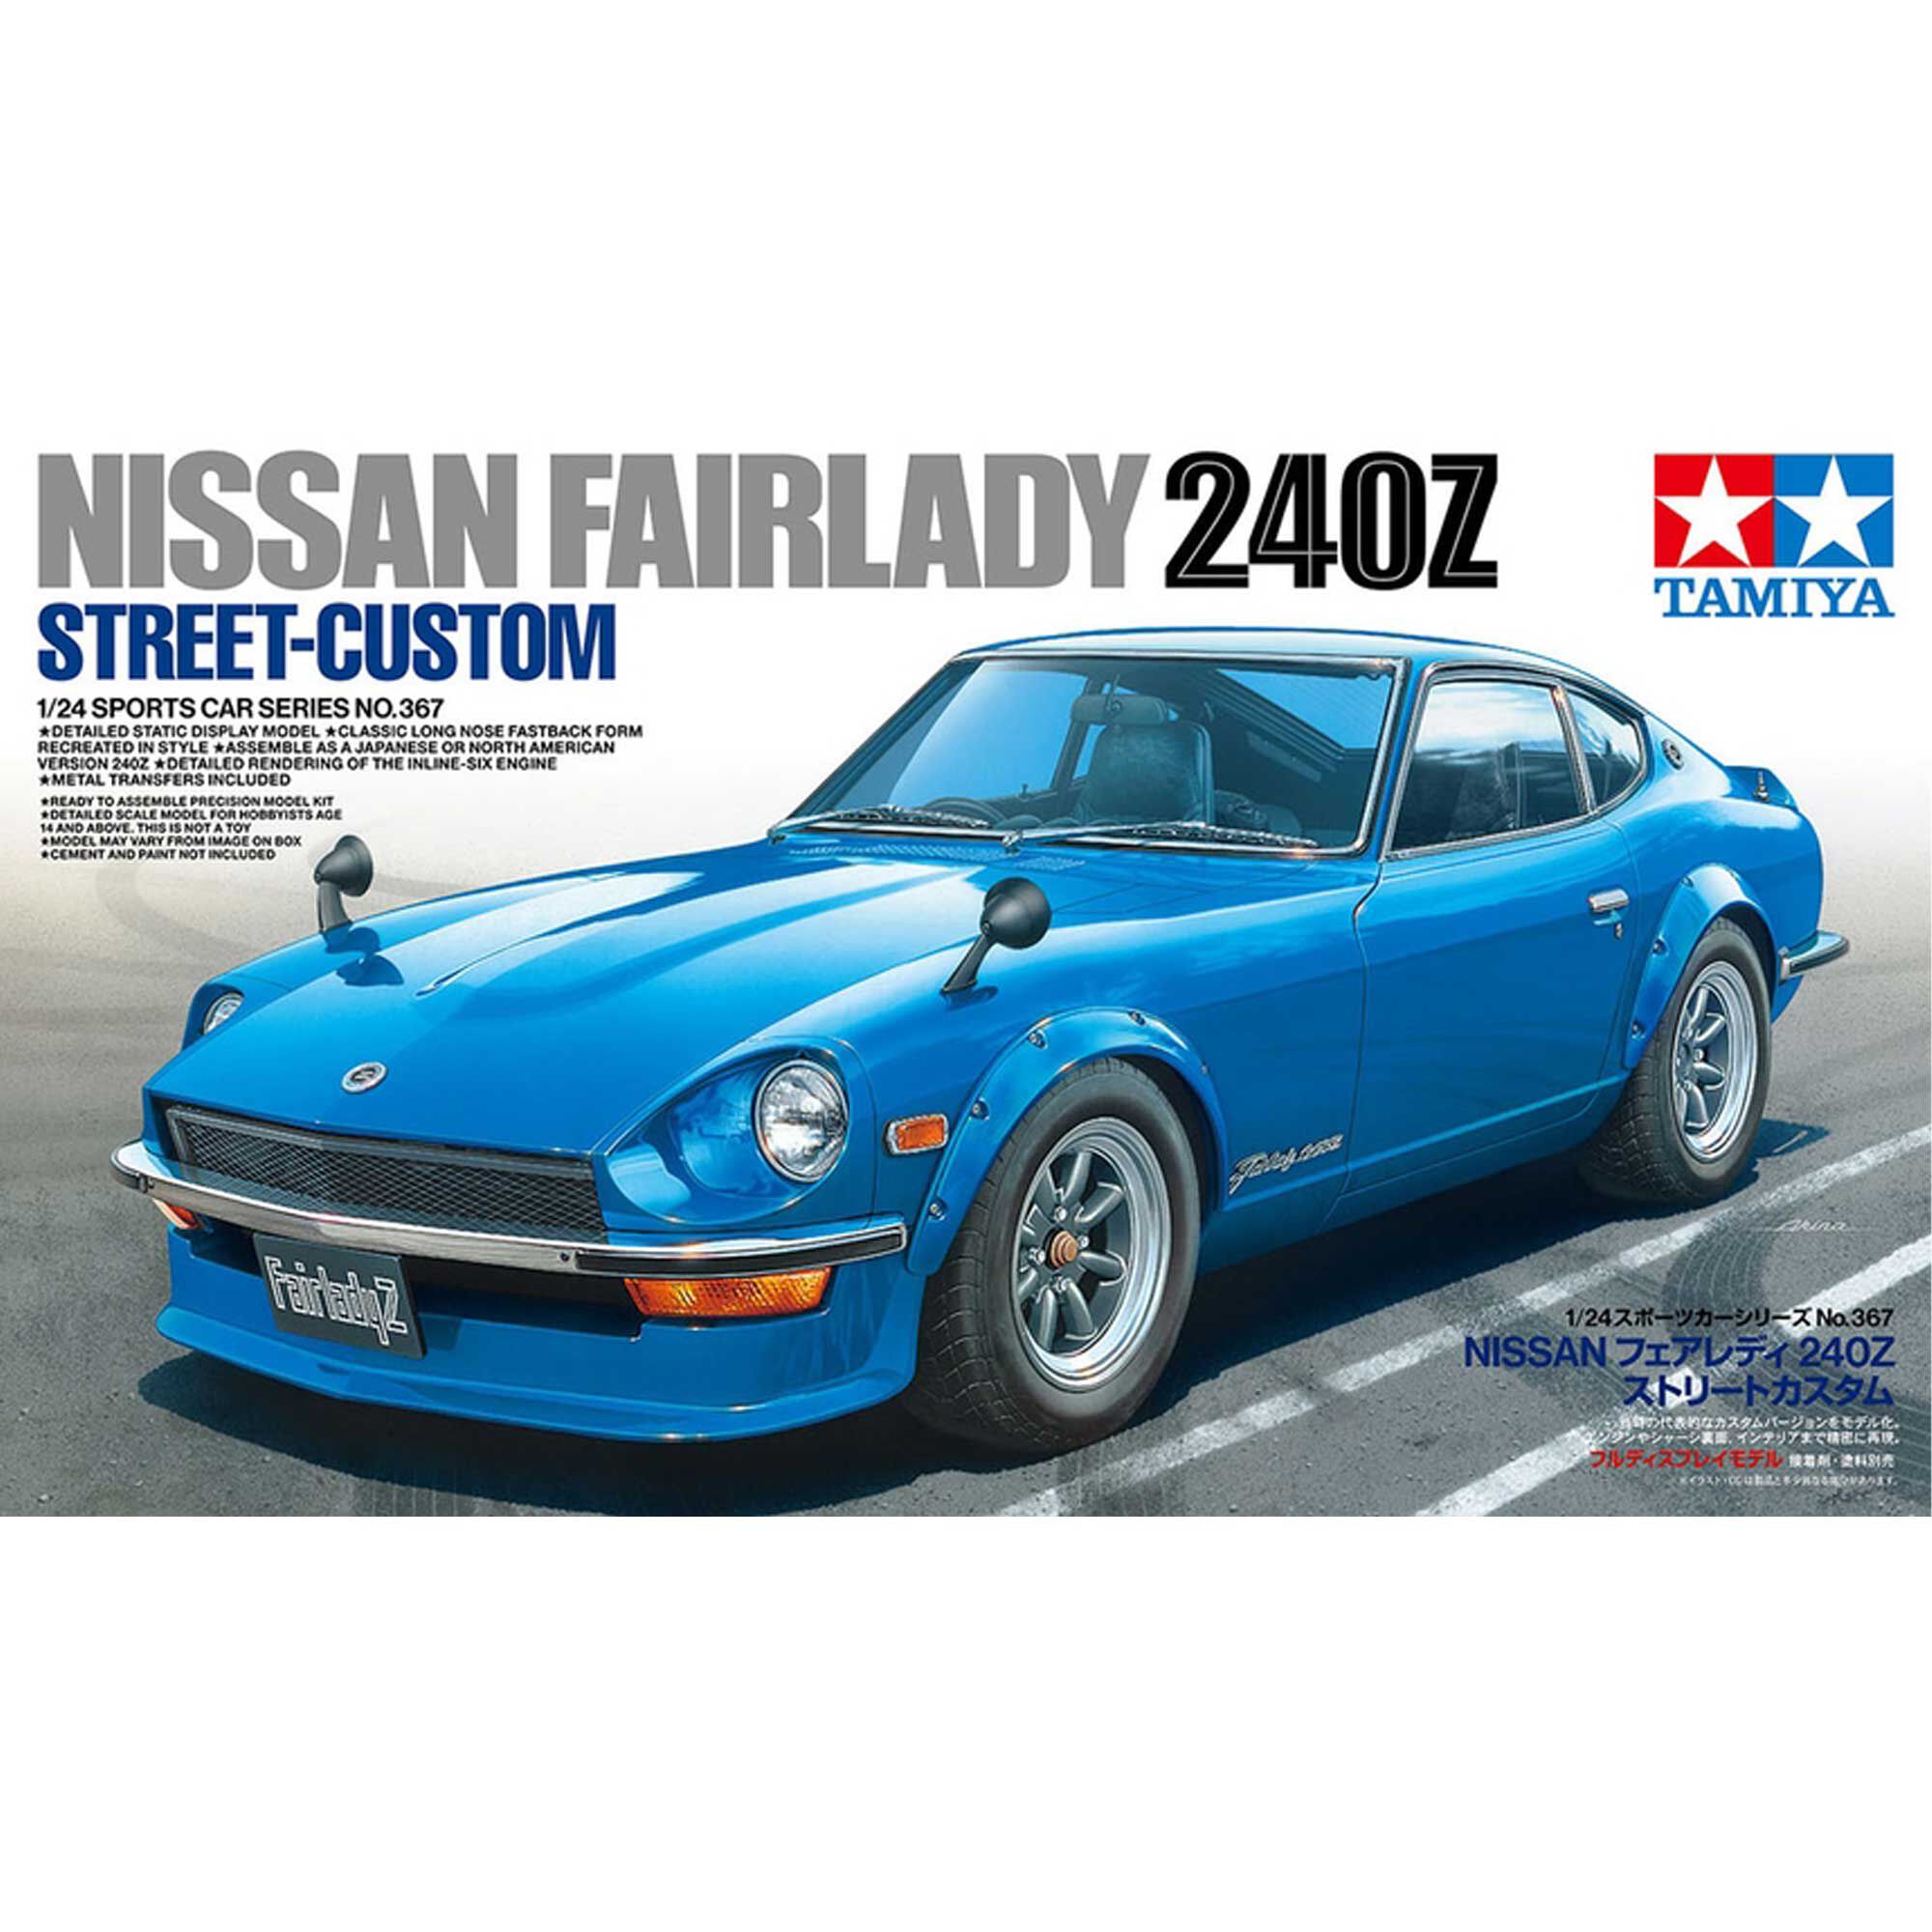 1/24 Nissan Fairlady 240Z Street-Custom